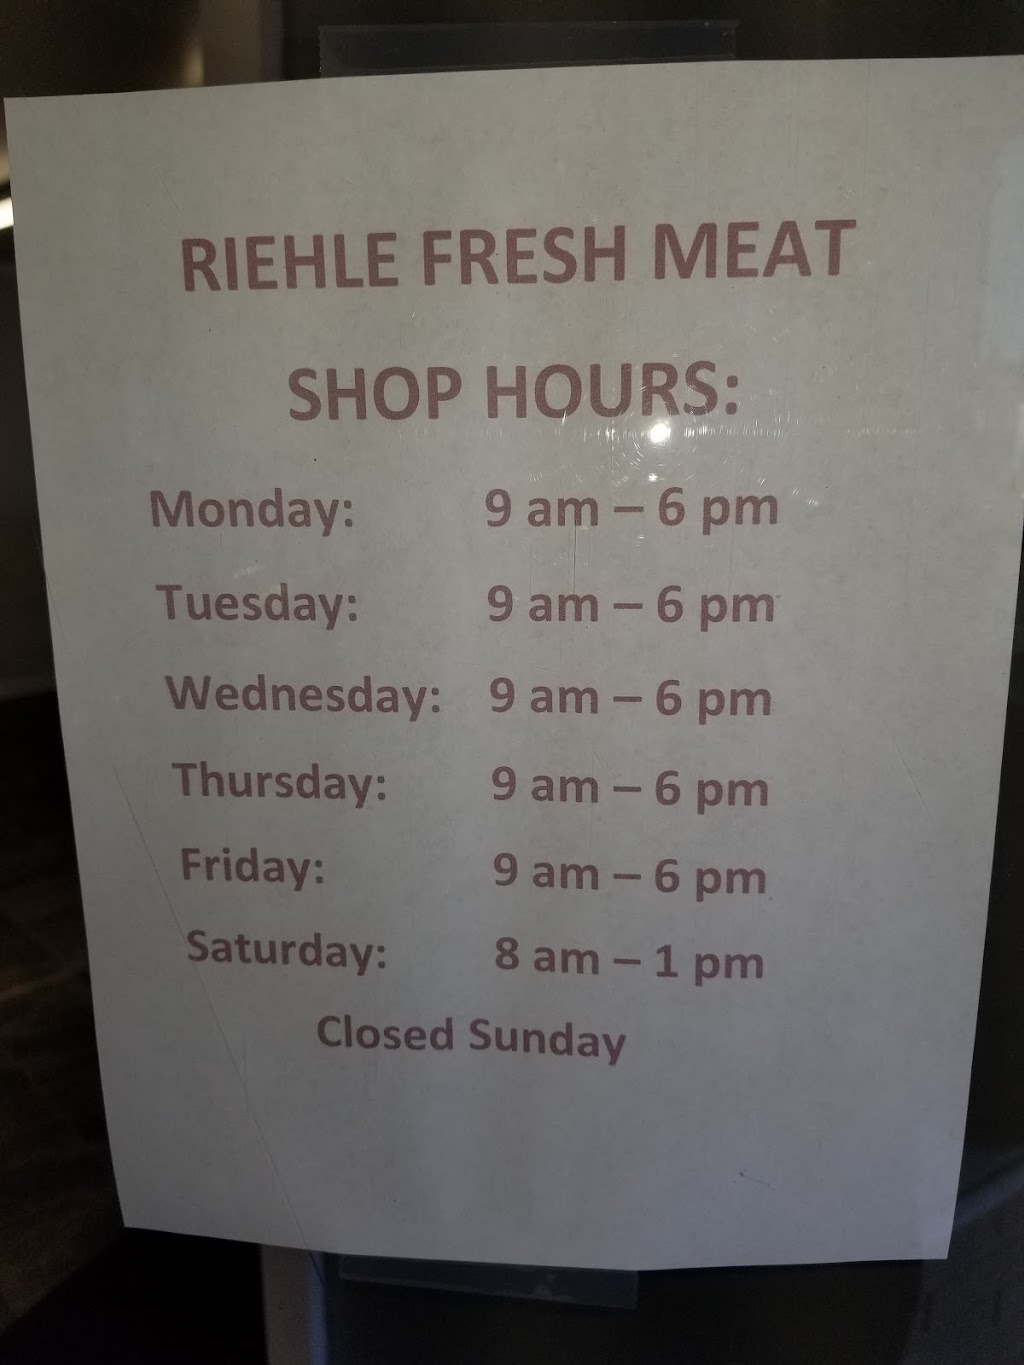 Riehle Fresh Meat & Deli | 629 S Buckeye St, Osgood, IN 47037, USA | Phone: (812) 609-4211